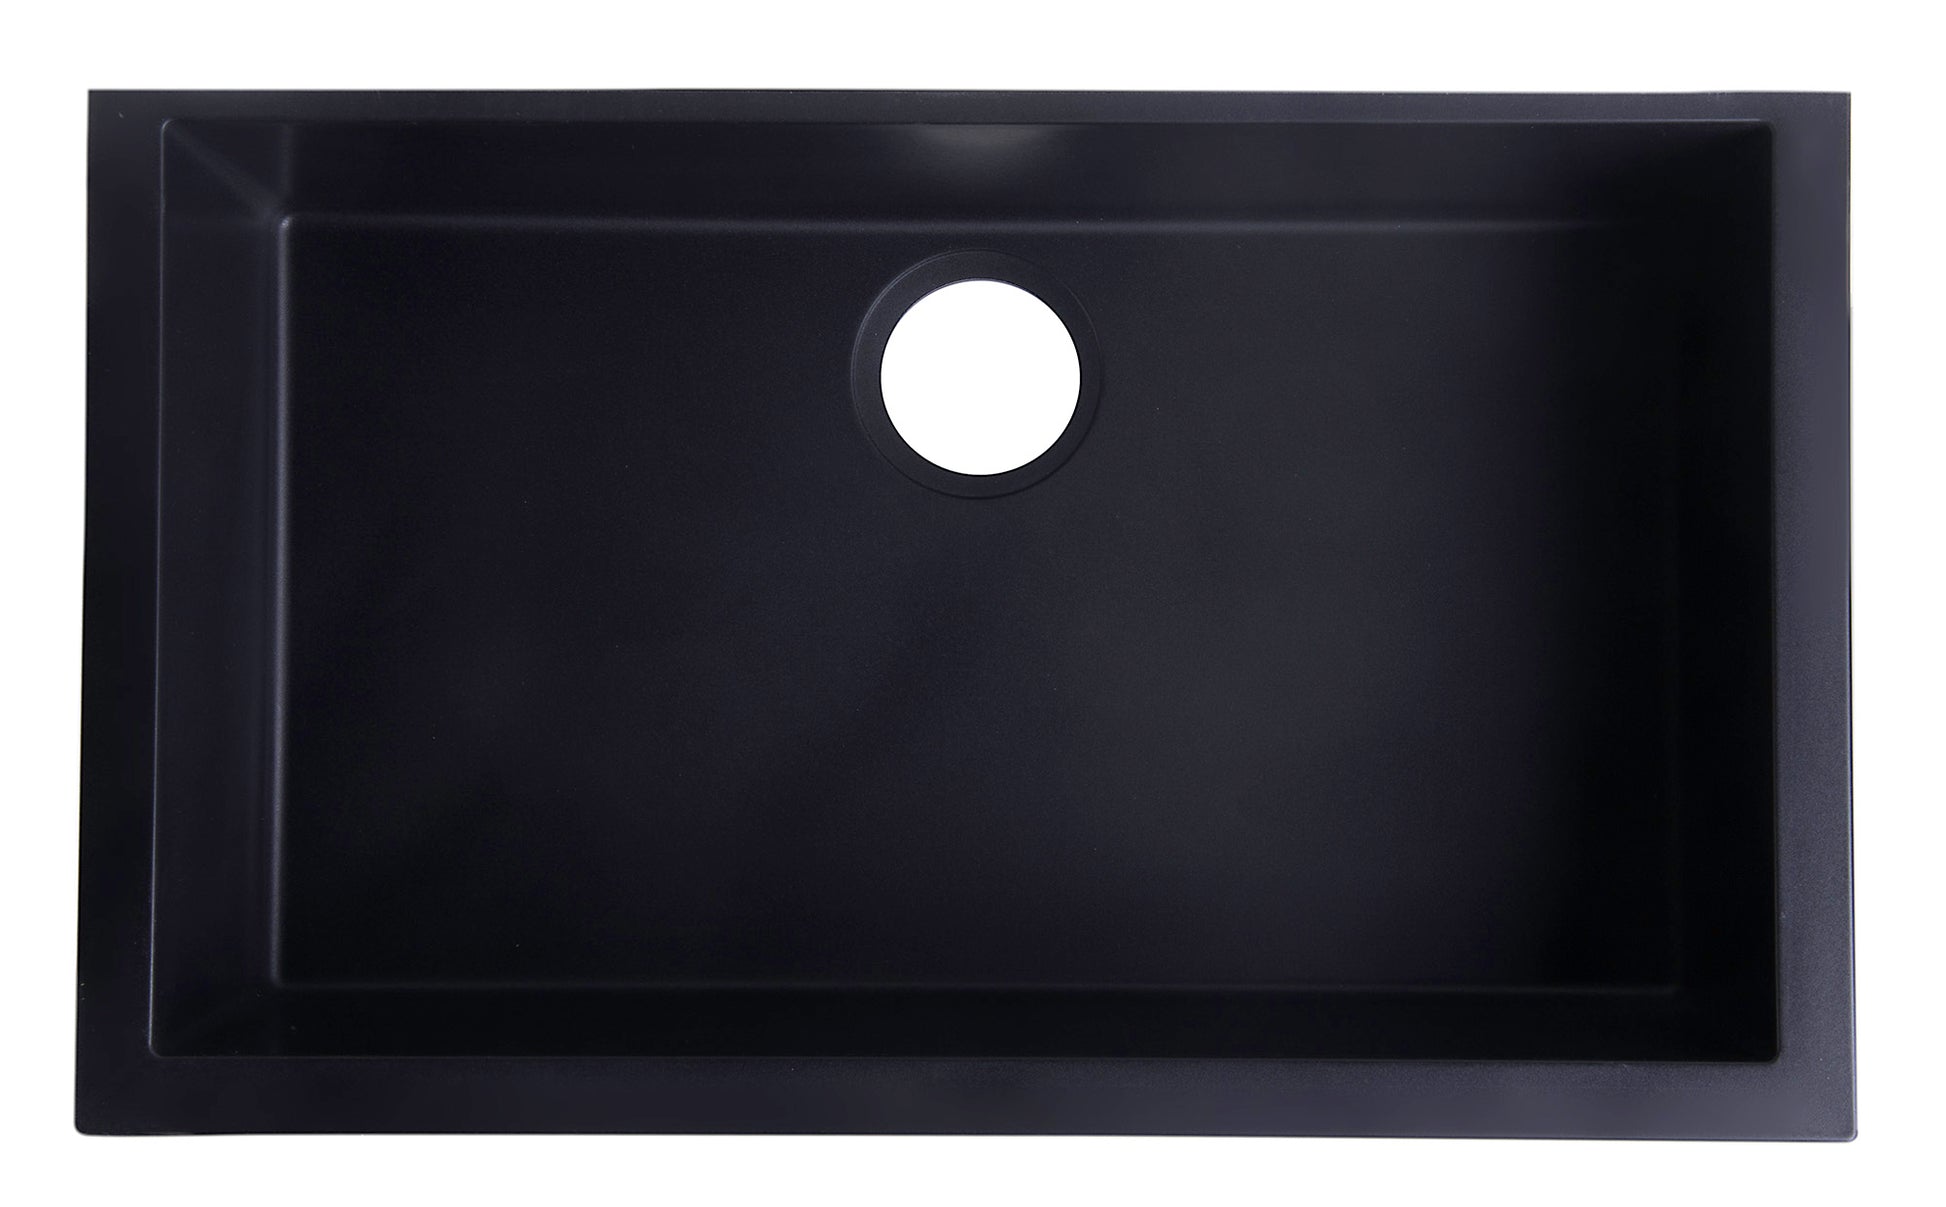 Alfi brand AB3020UM 30" Undermount Single Bowl Granite Composite Kitchen Sink